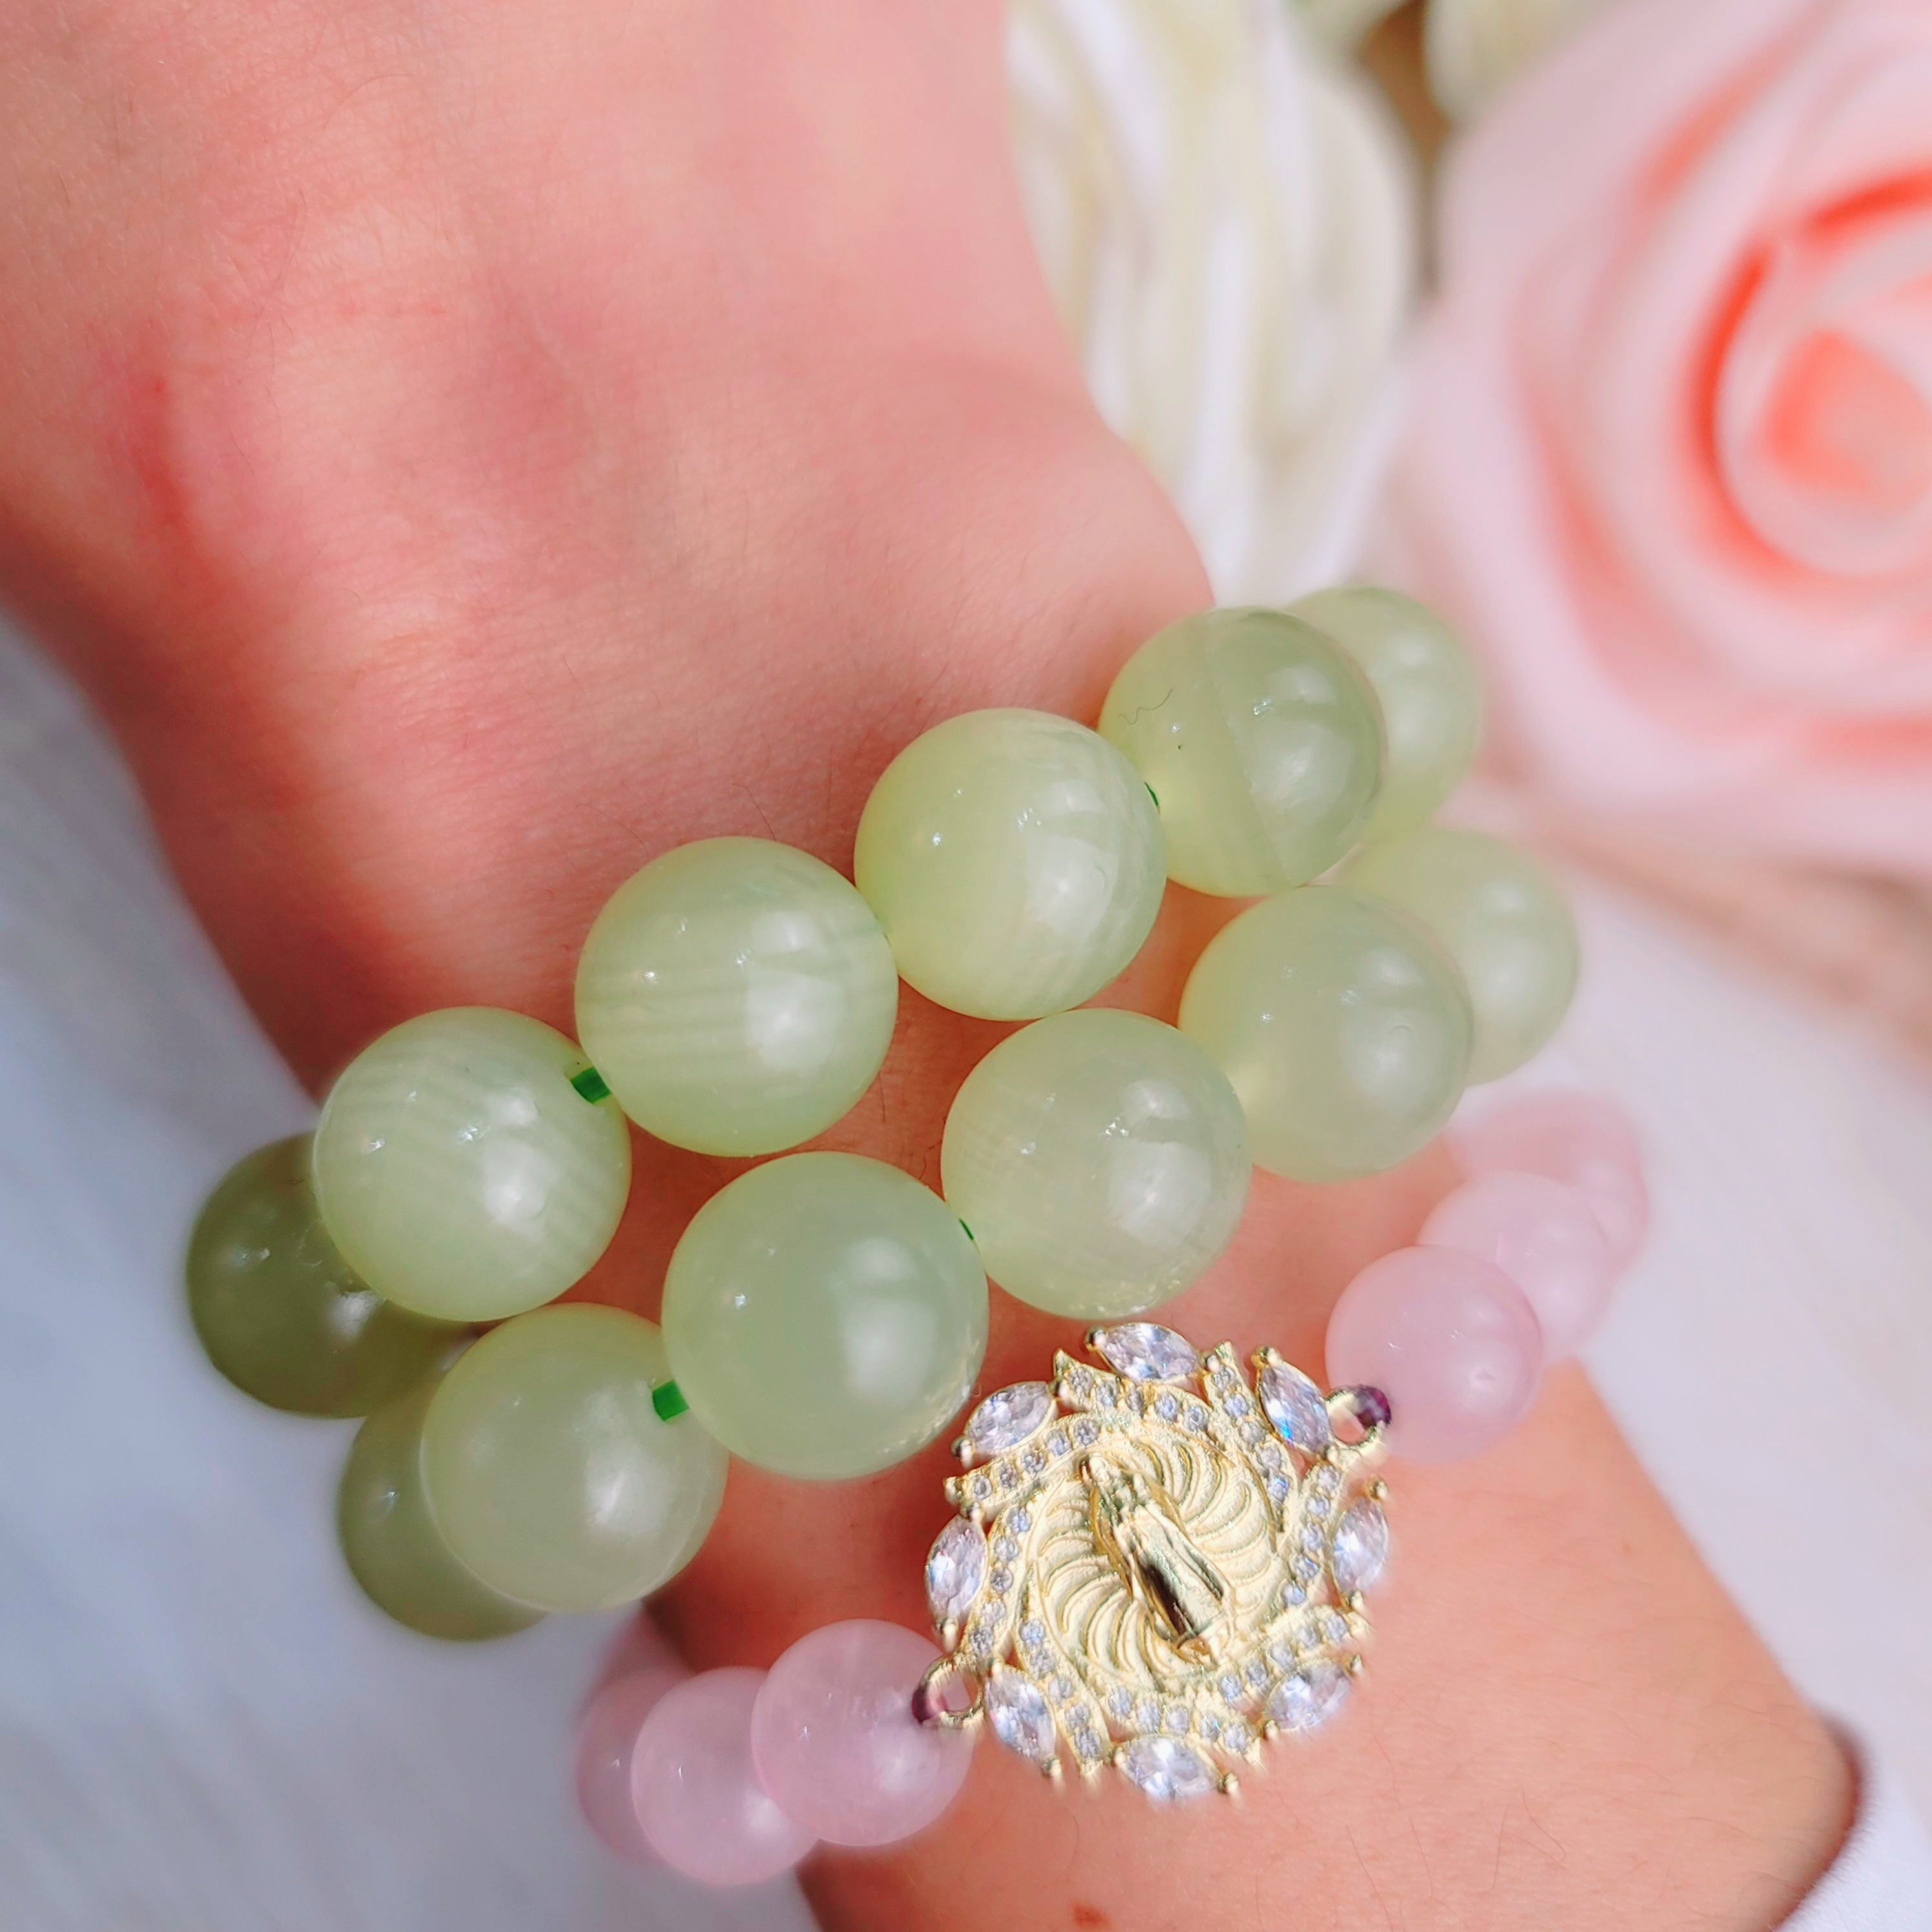 Green Calcite Bracelet for Emotional Balance & Prosperity